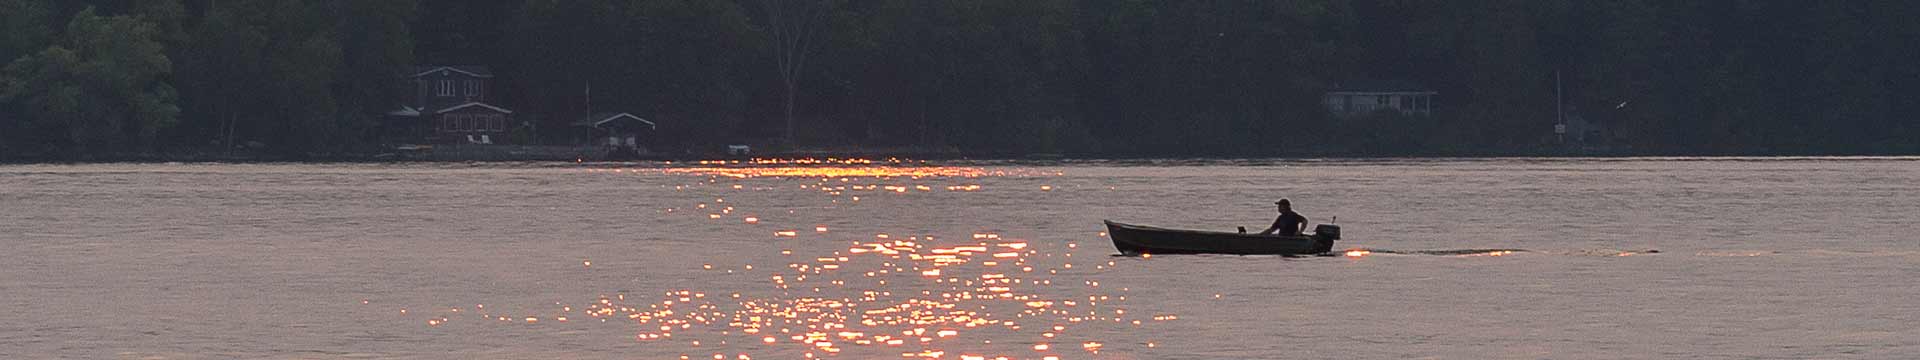 Fisherman out in his boat at sunset. Photo credit: John MacLean